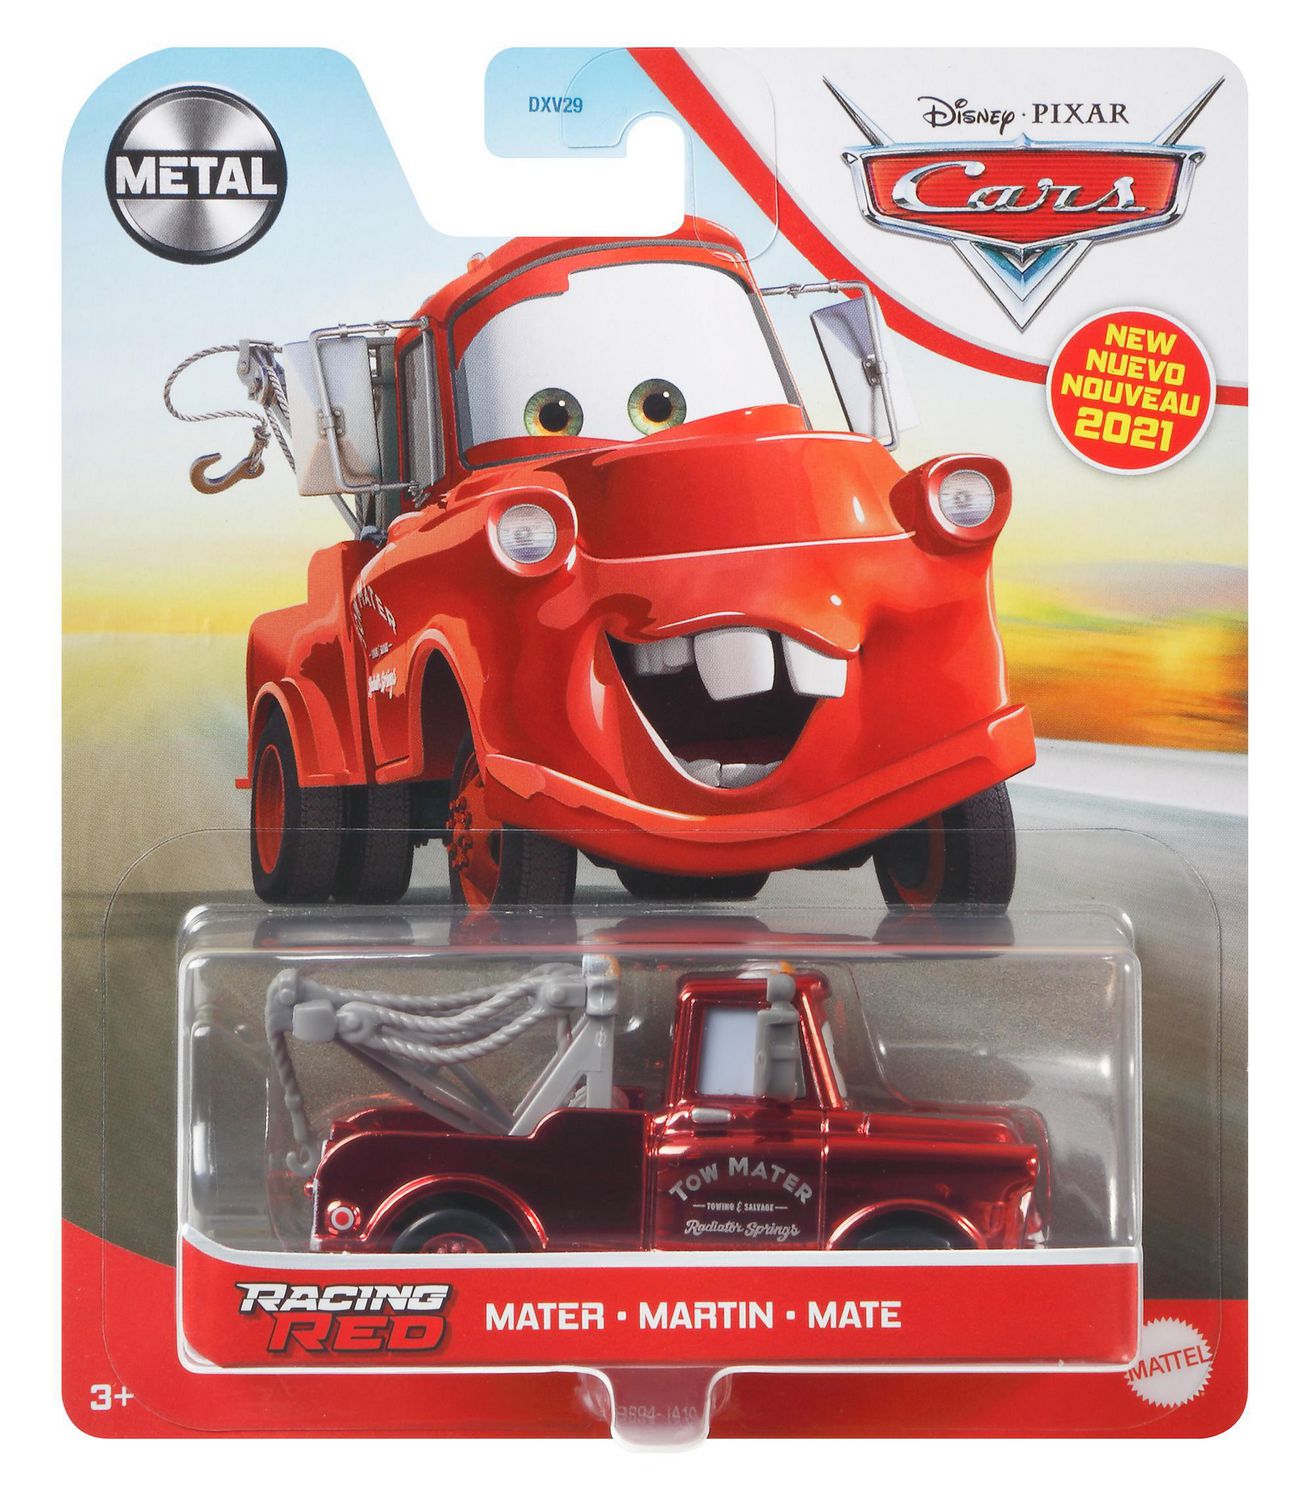 Jouets et voitures Pixar Disney Cars 3, Mater & amp; Maroc